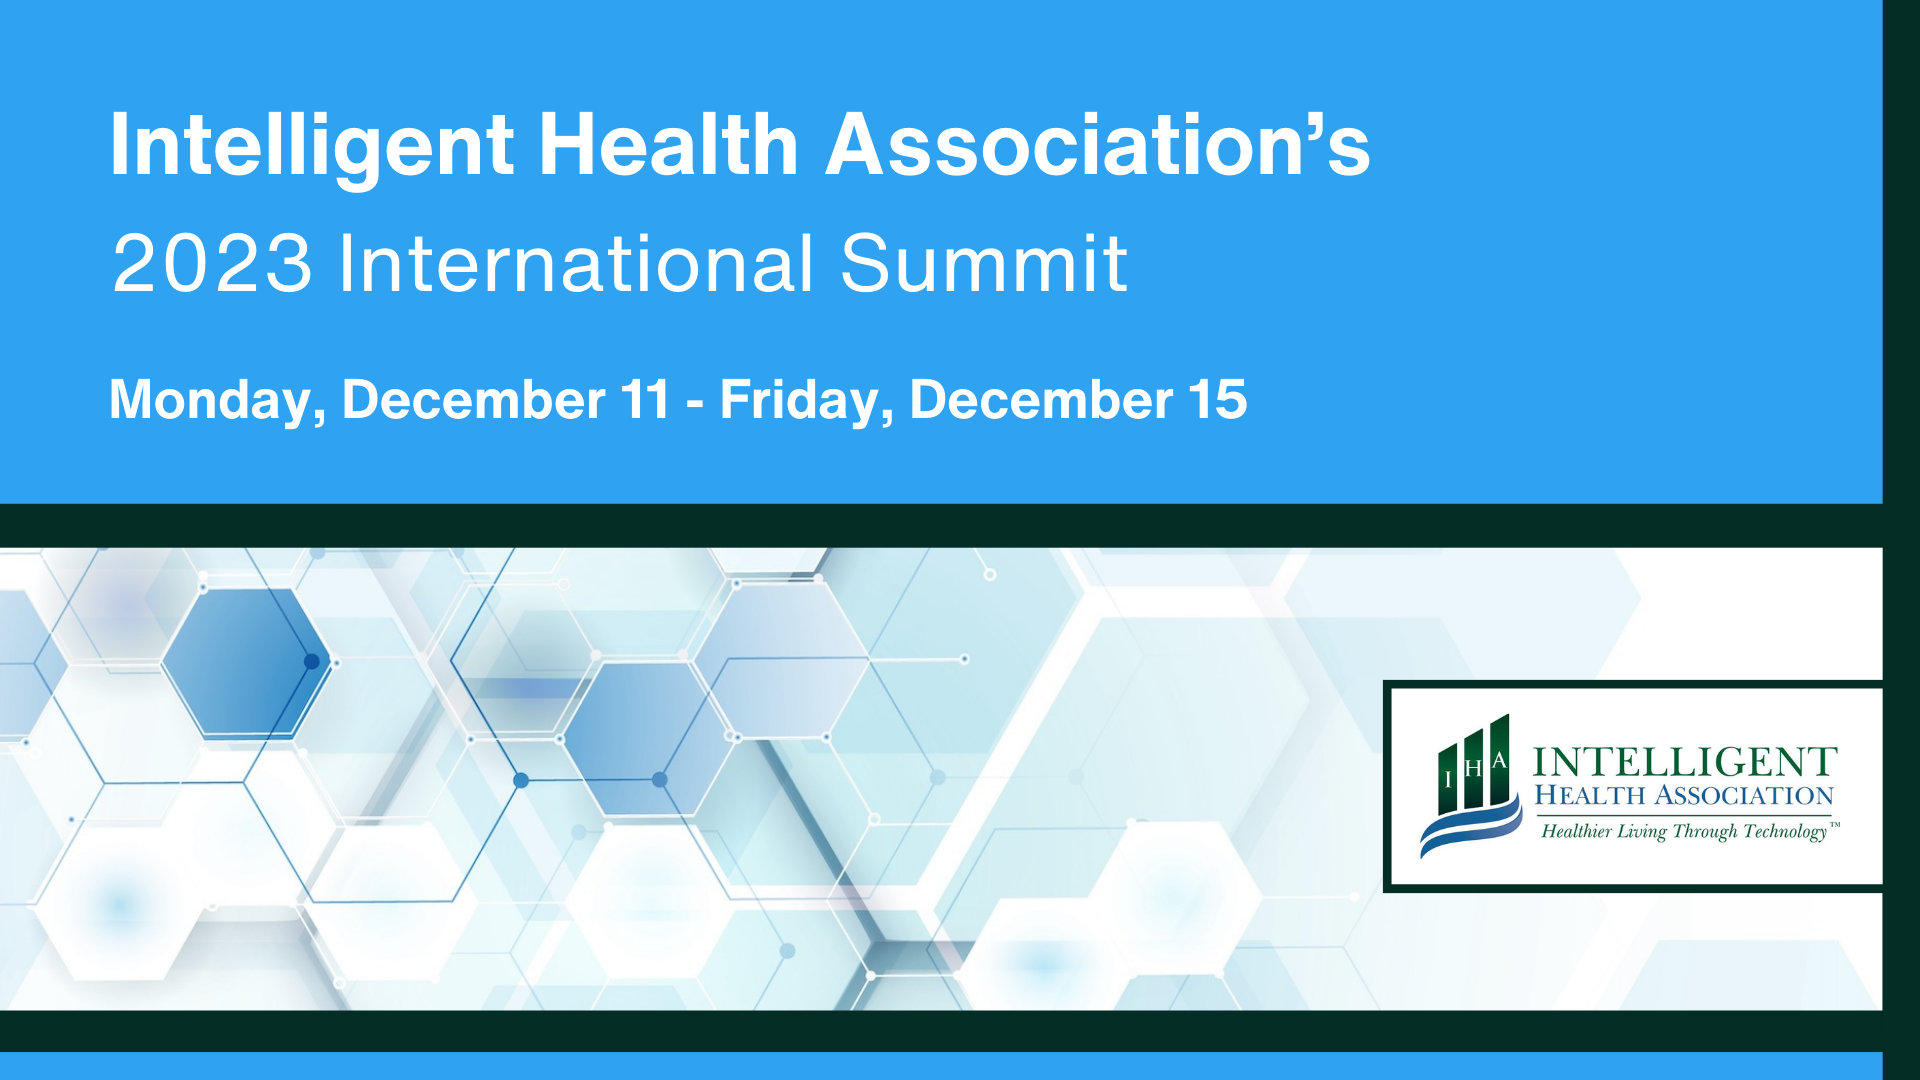 The Intelligent Health Association&#39;s 2023 International Summit starts on Monday, December 11